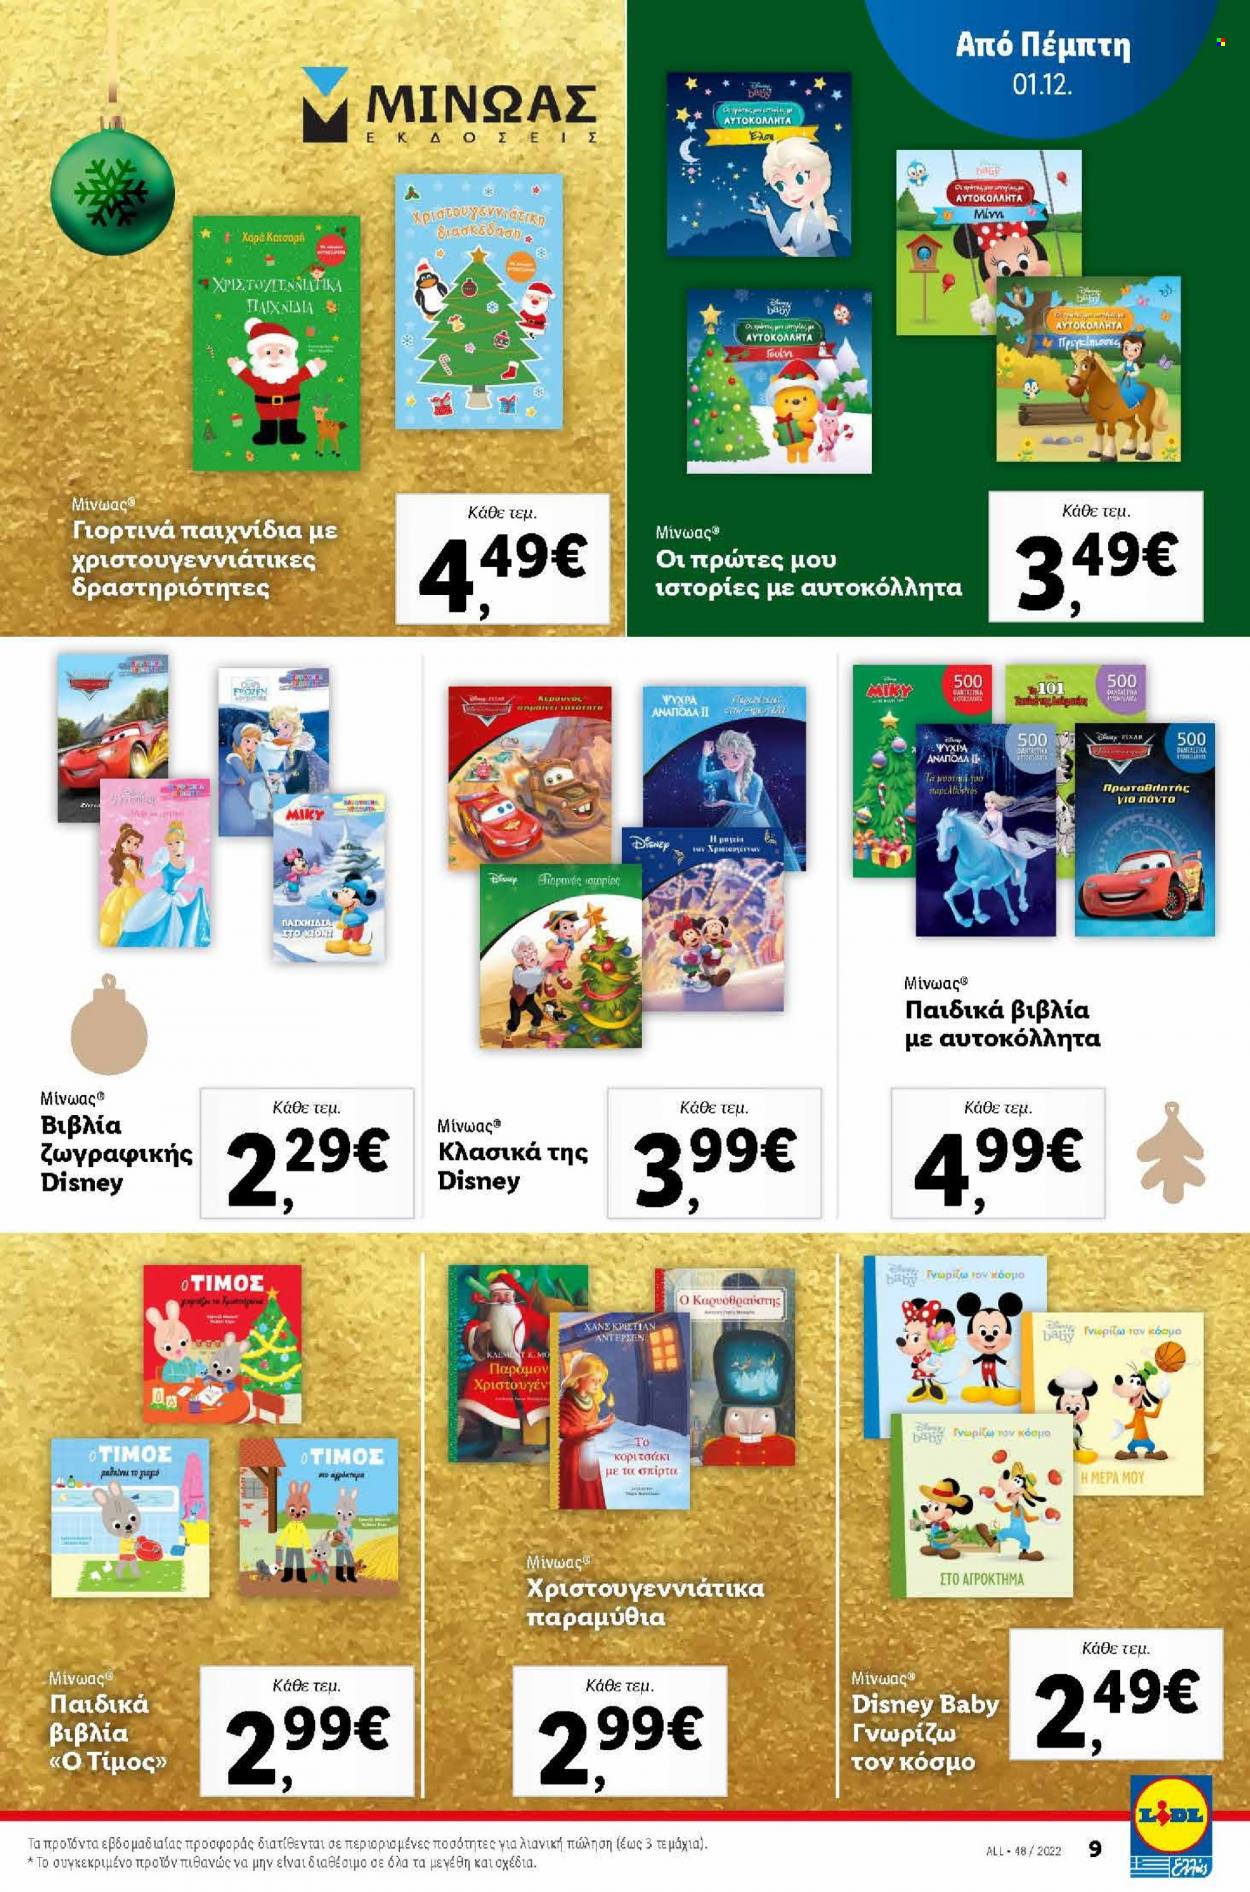 thumbnail - Φυλλάδια Lidl - 01.12.2022 - 07.12.2022 - Εκπτωτικά προϊόντα - Disney, Frozen, βιβλία. Σελίδα 9.